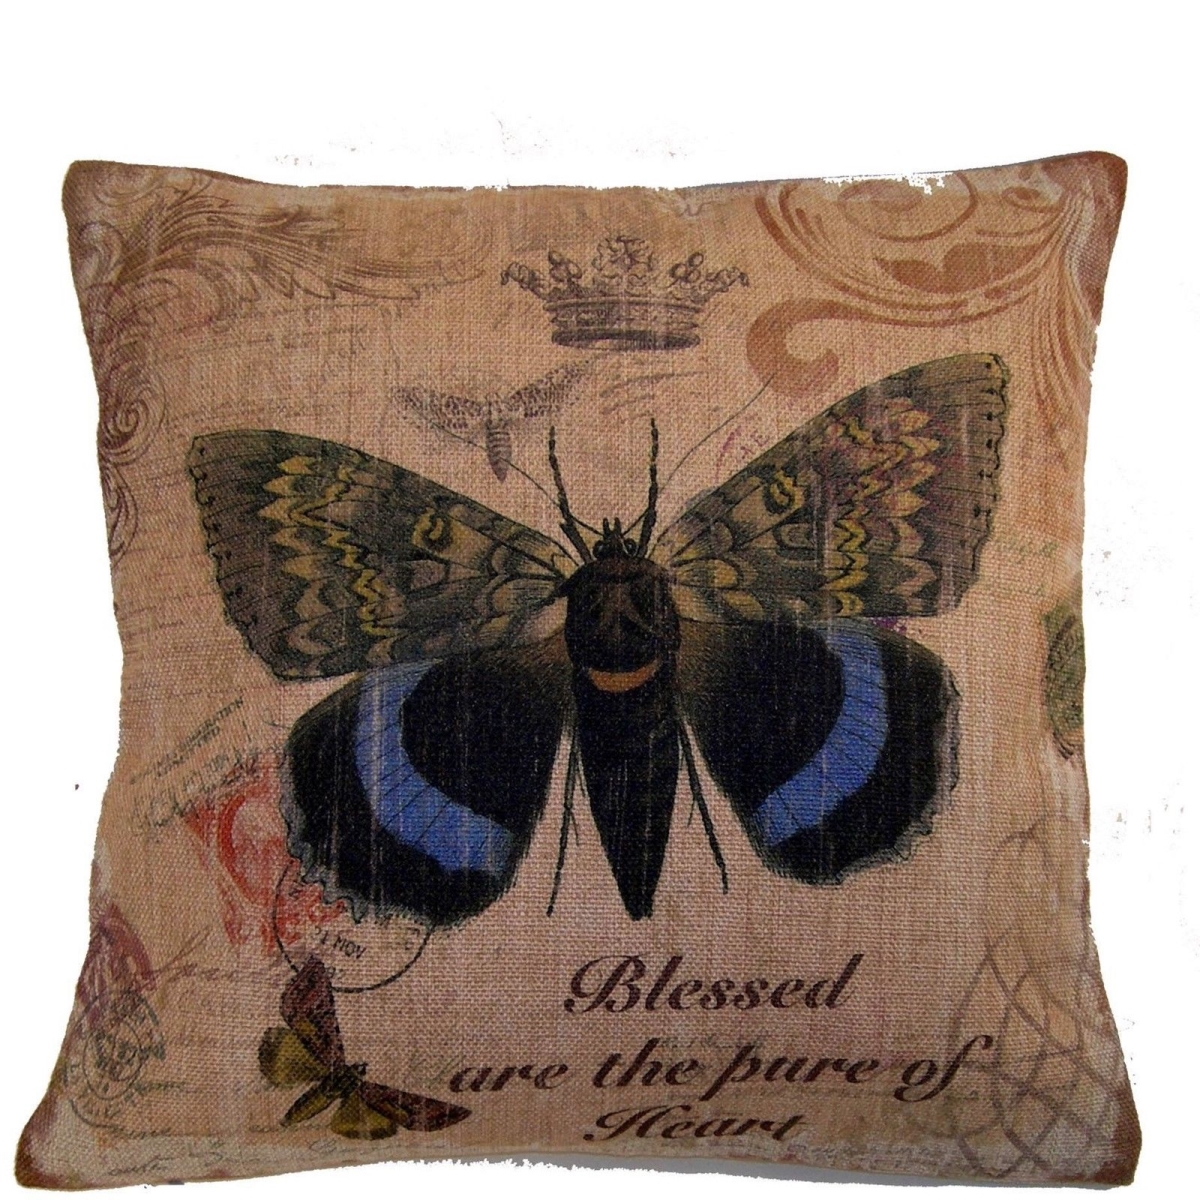 120376.17sq 17 In. Elegant Decor Butterfly Throw Pillow, Black & Blue